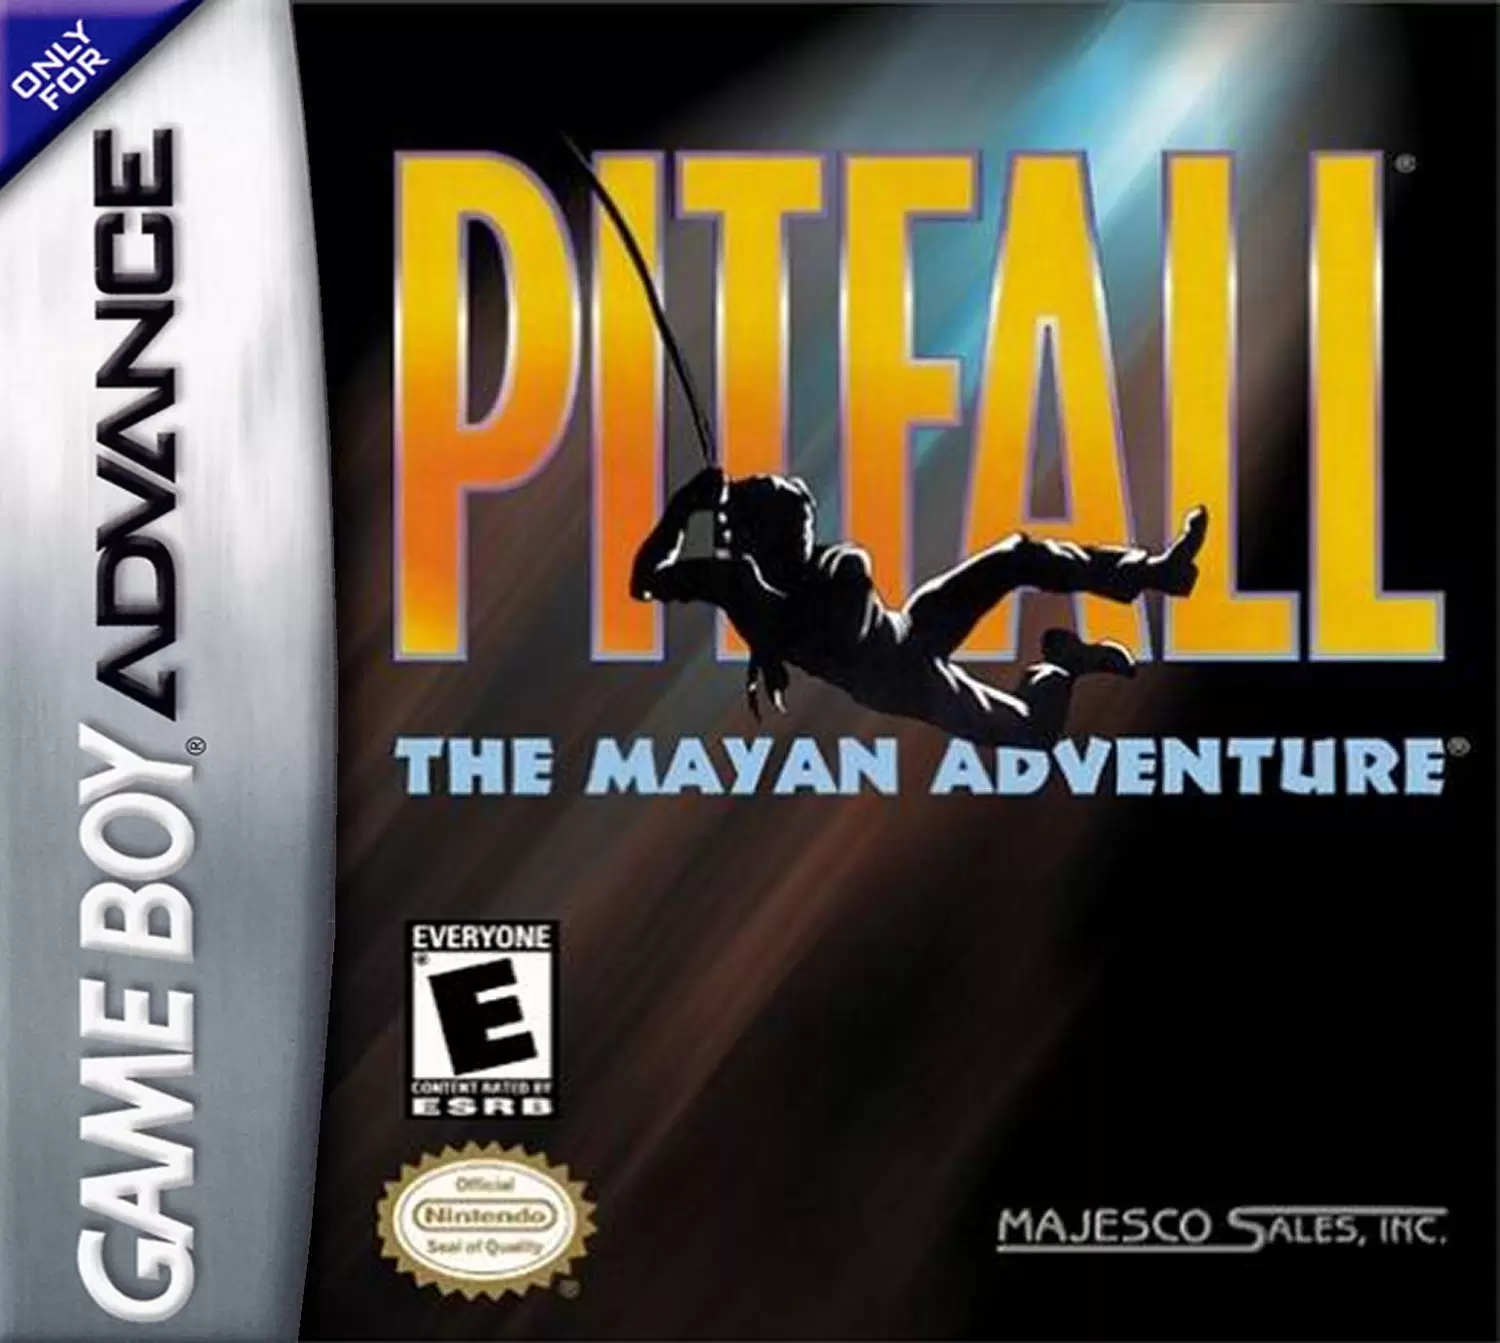 Game Boy Advance Games - Pitfall: The Mayan Adventure